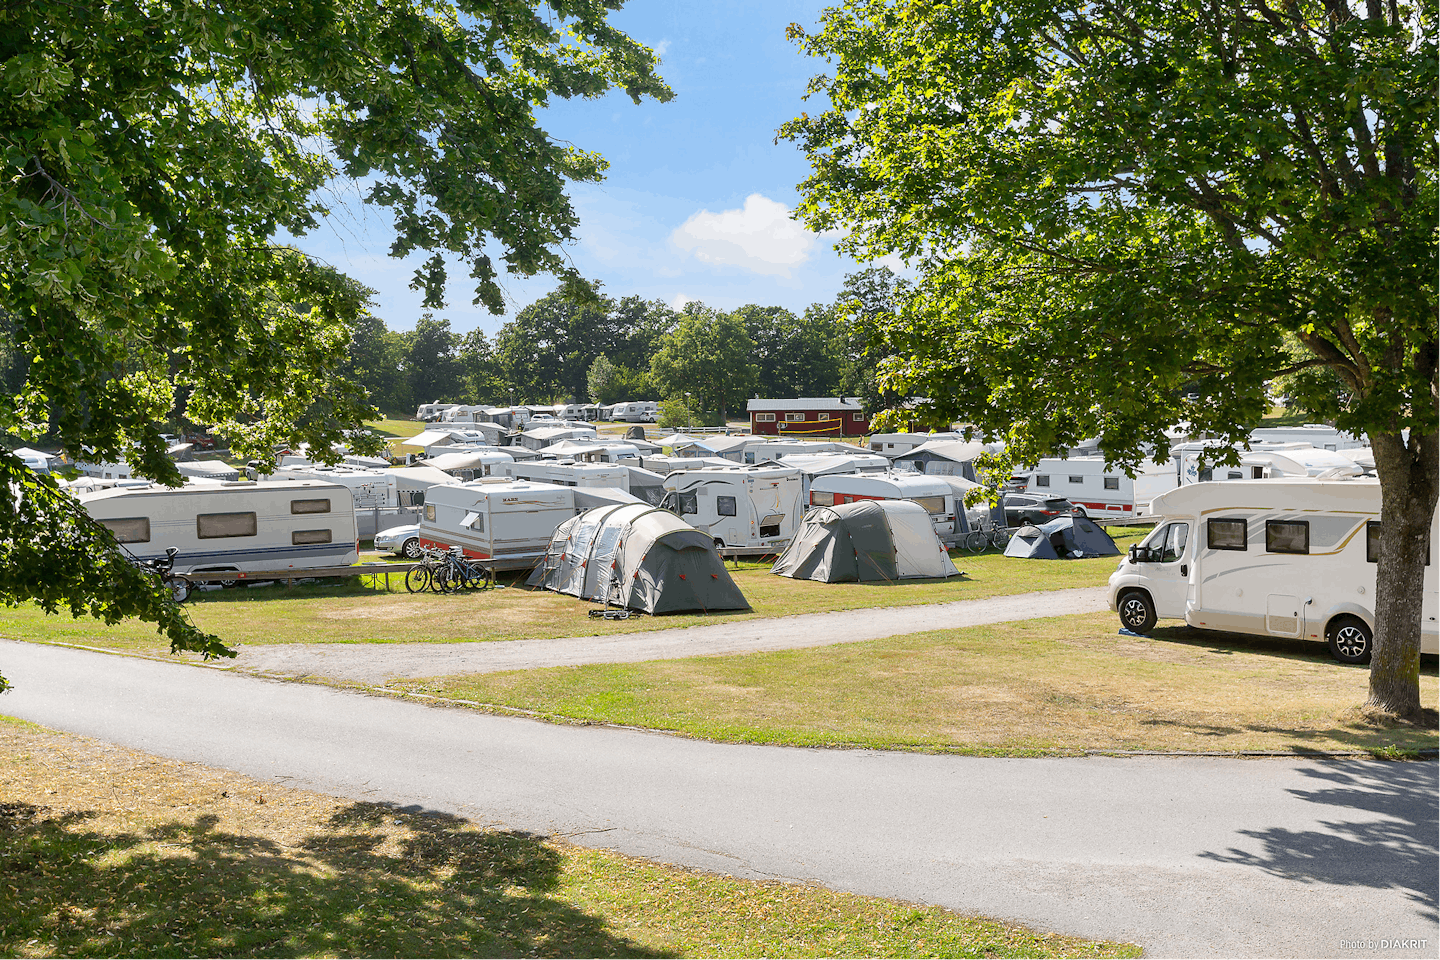 First Camp Skönstavik-Karlskrona  Nordic Camping Skönstavik - Standplätze auf dem Campingplatz